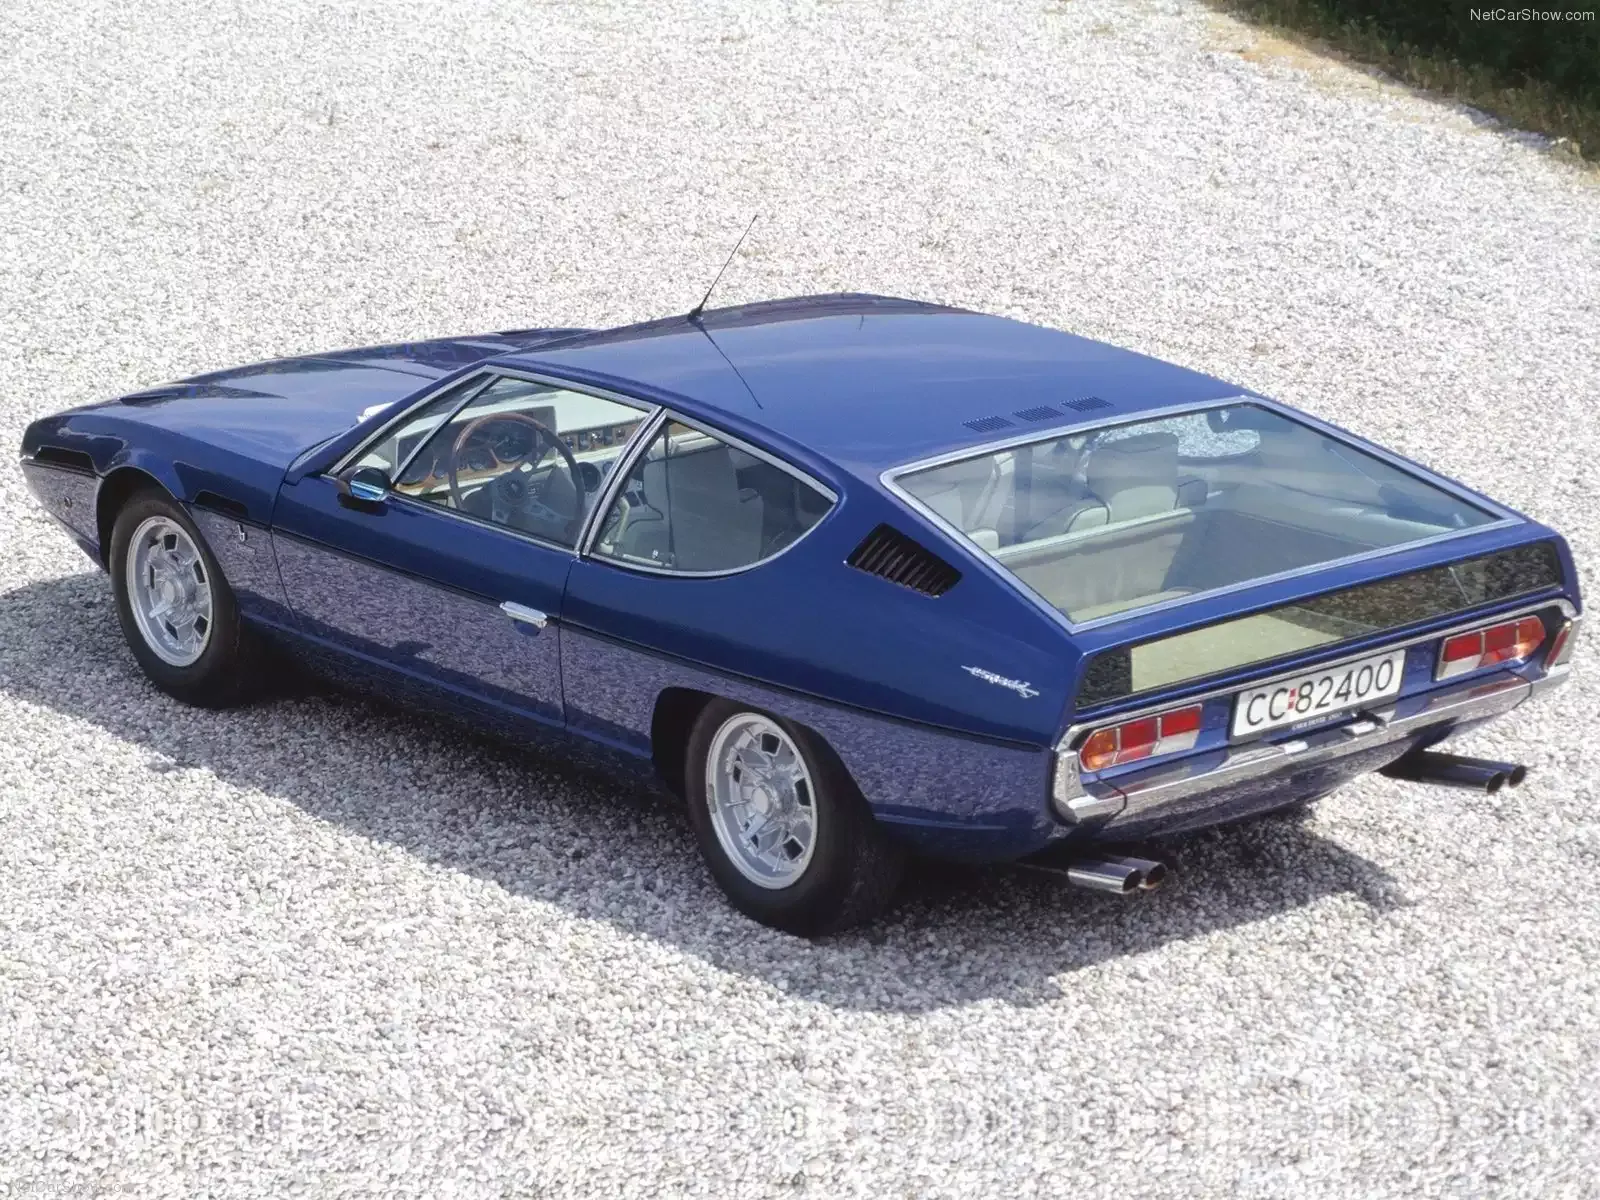 Hình ảnh siêu xe Lamborghini Espada 1968 & nội ngoại thất